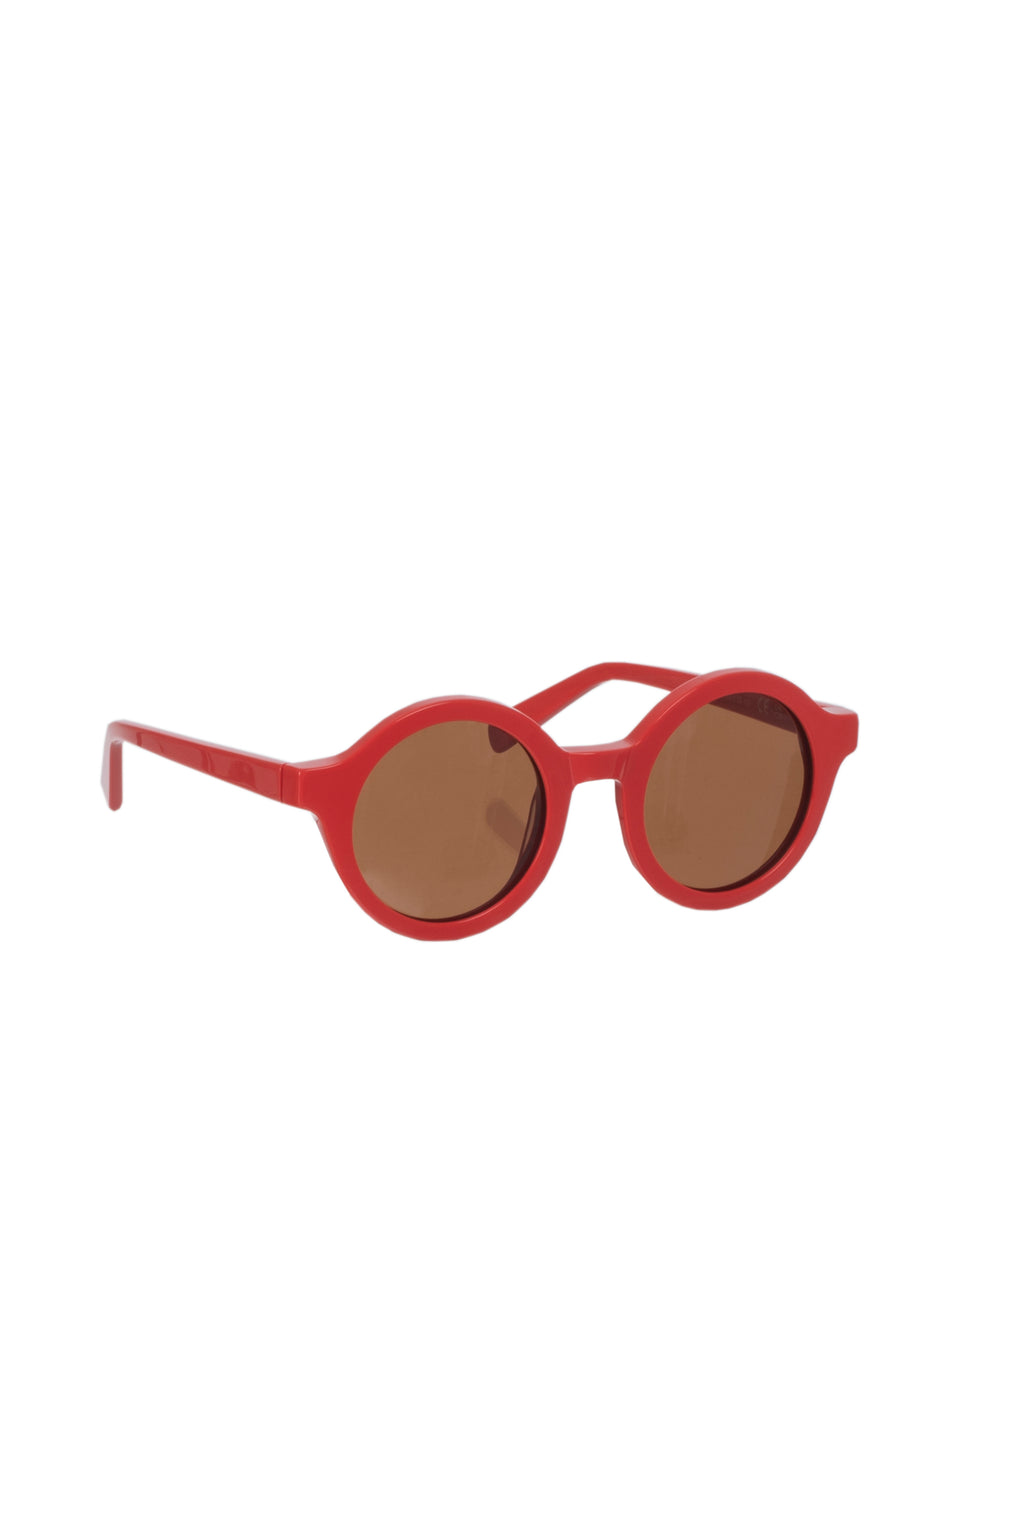 Kids Sunglasses Unisex| Red